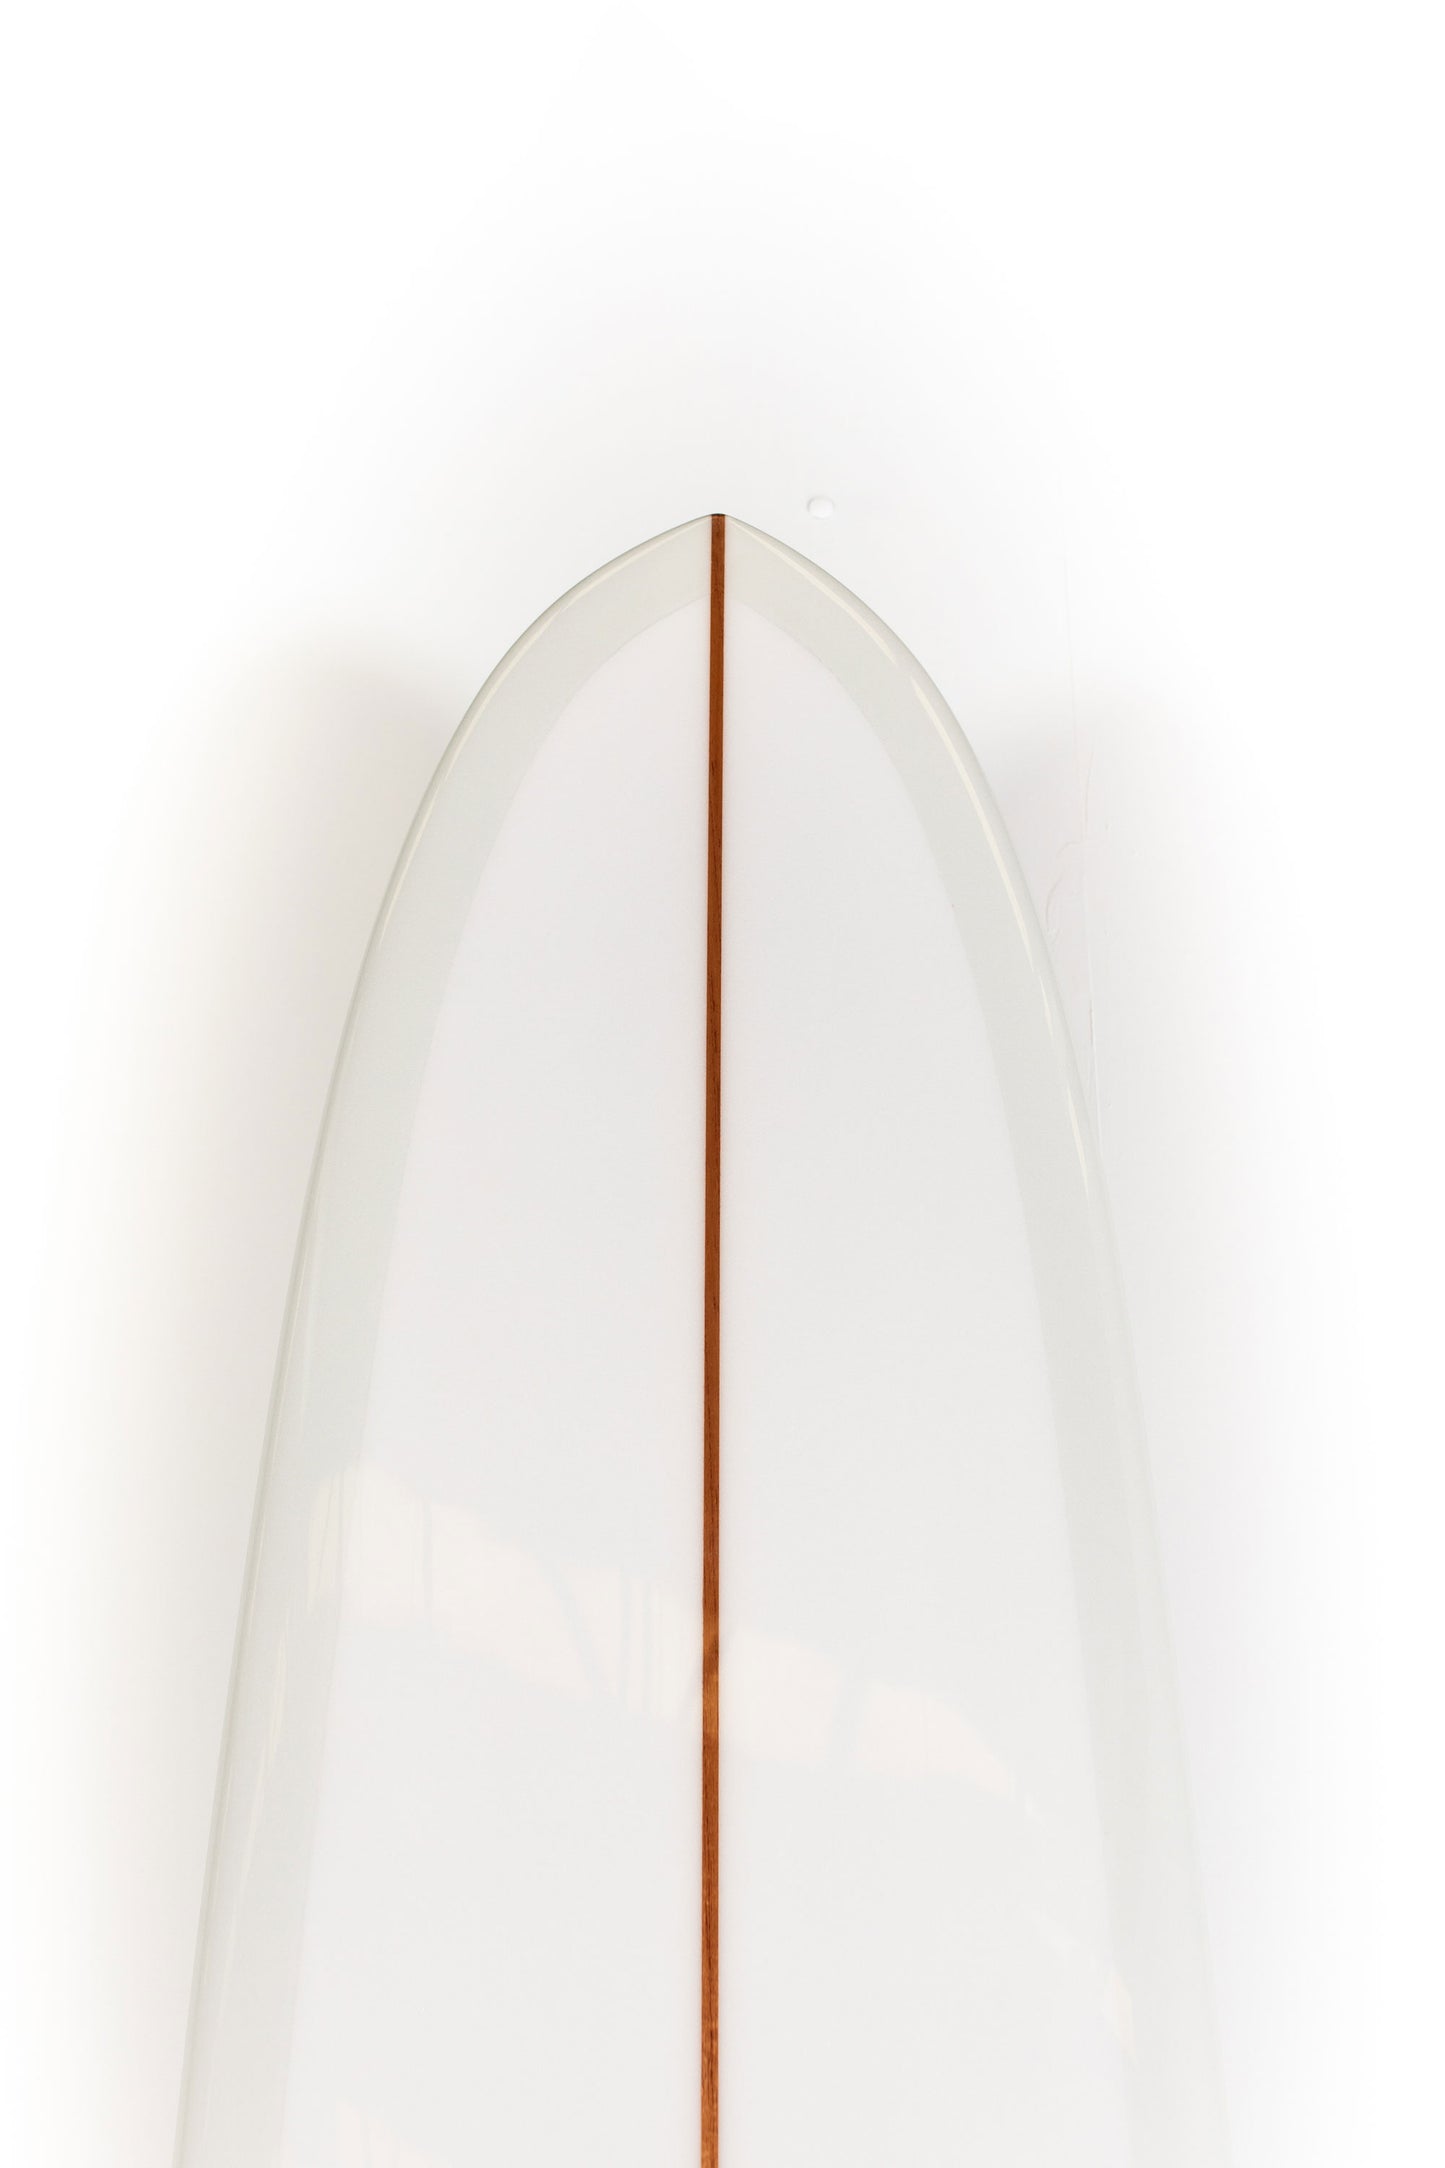 
                  
                    Pukas Surf Shop - Christenson Surfboard  - THE CLIFF PINTAIL by Chris Christenson - 9'6” x 23 1/4 x 2 7/8 - CX05339
                  
                